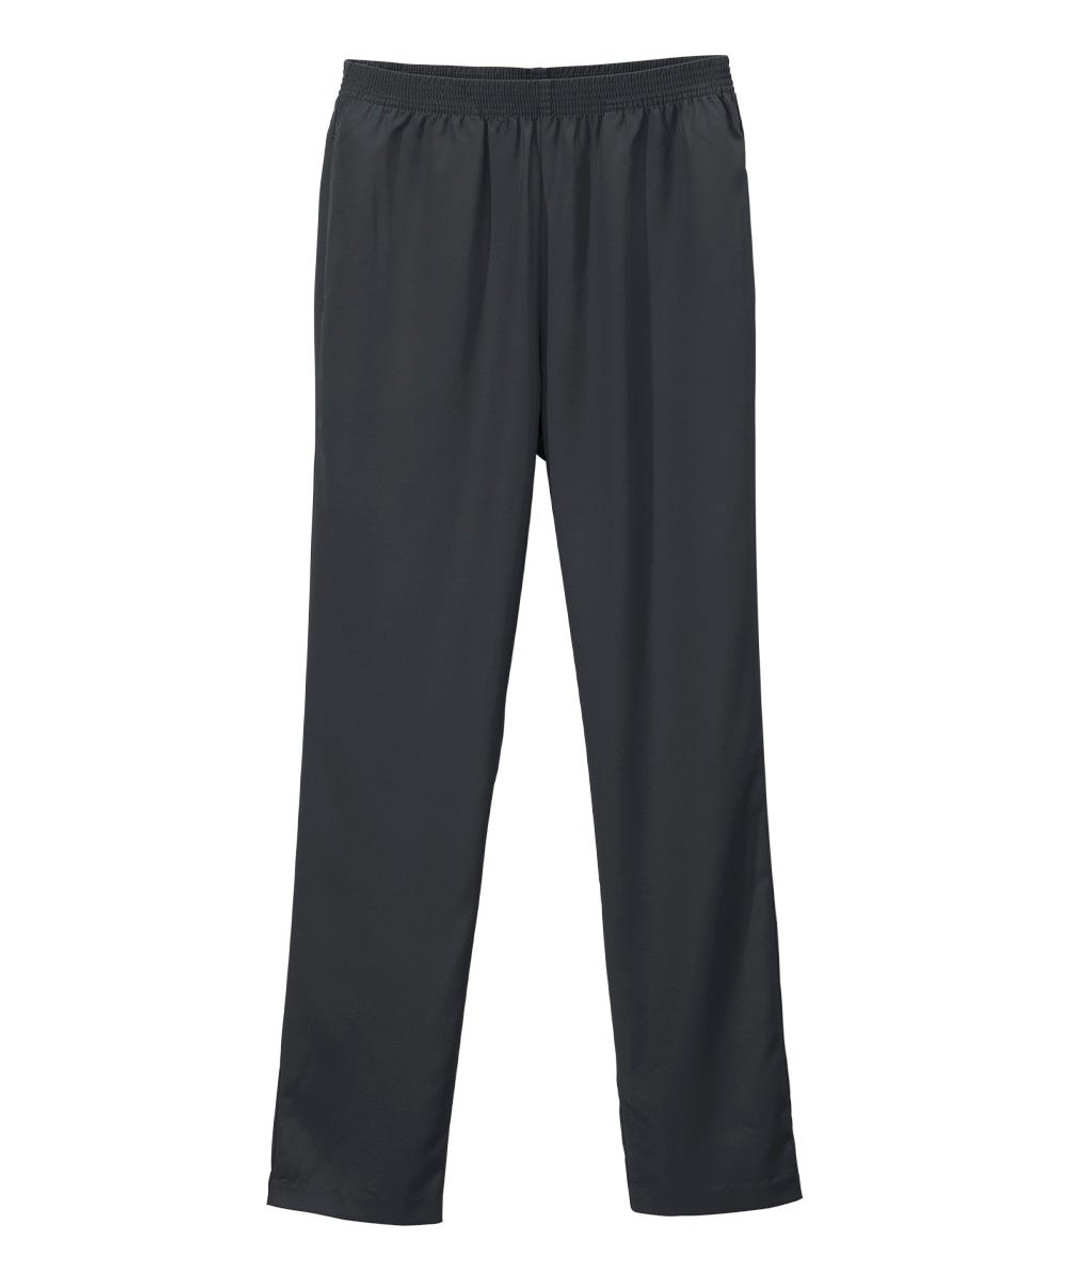 Silverts SV13100 Women's Pull On Pants - Senior Women's Pull-on Petite Gabardine Pant Black, Size=8P, SV13100-BLK-8P